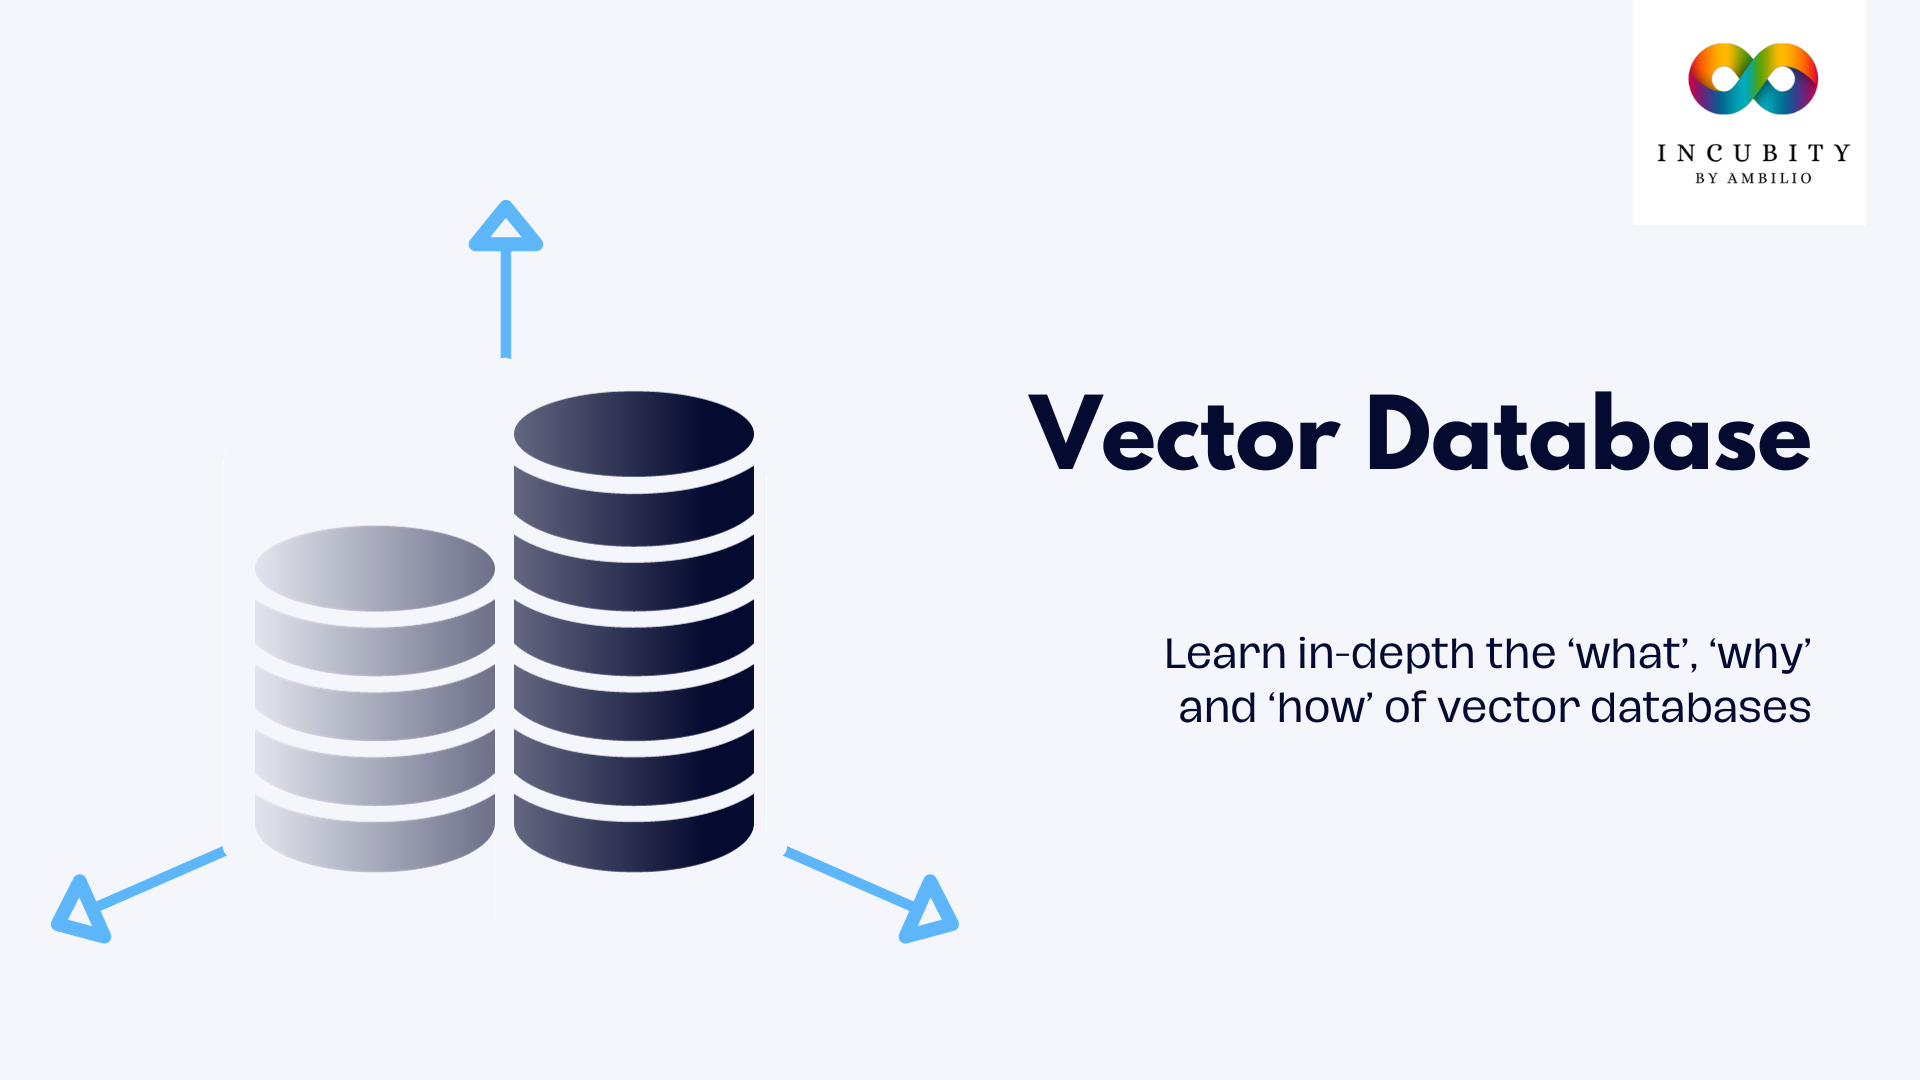 vector databases